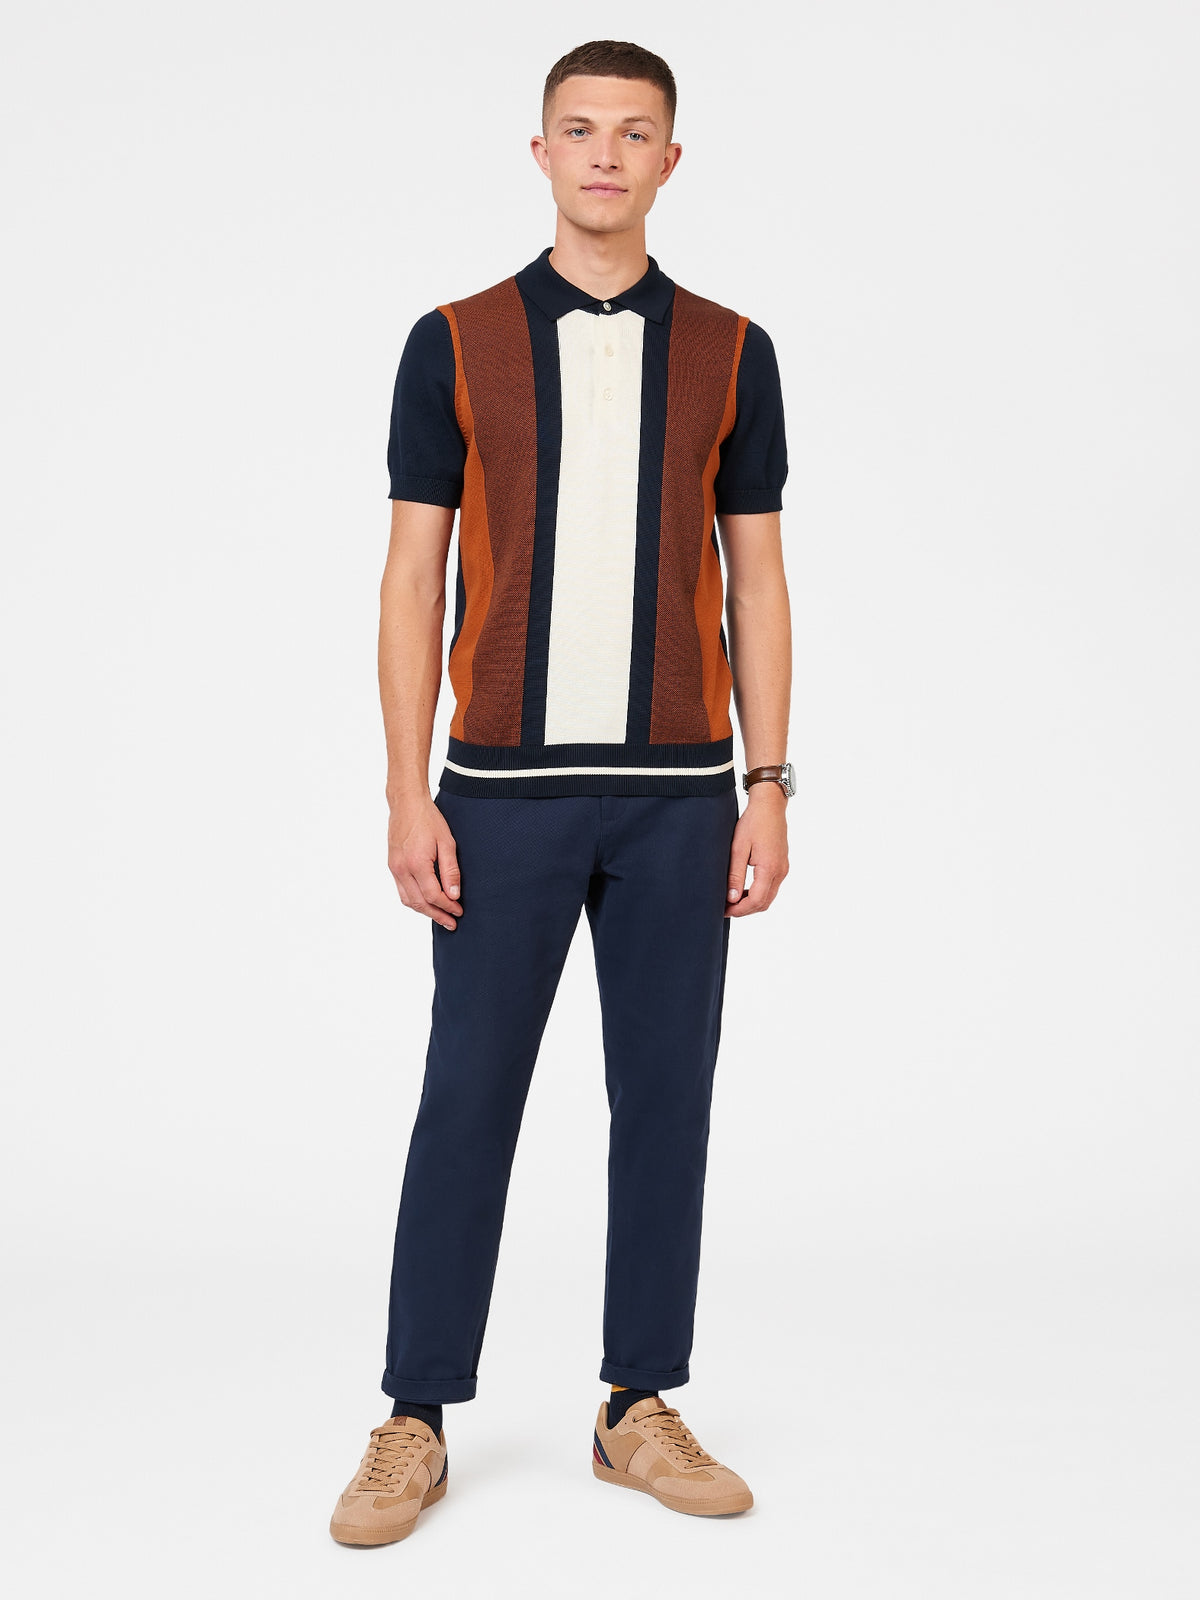 Ben Sherman Mens Vertical Stripe Knitted Polo Shirt, 05, 73992, Dark Navy